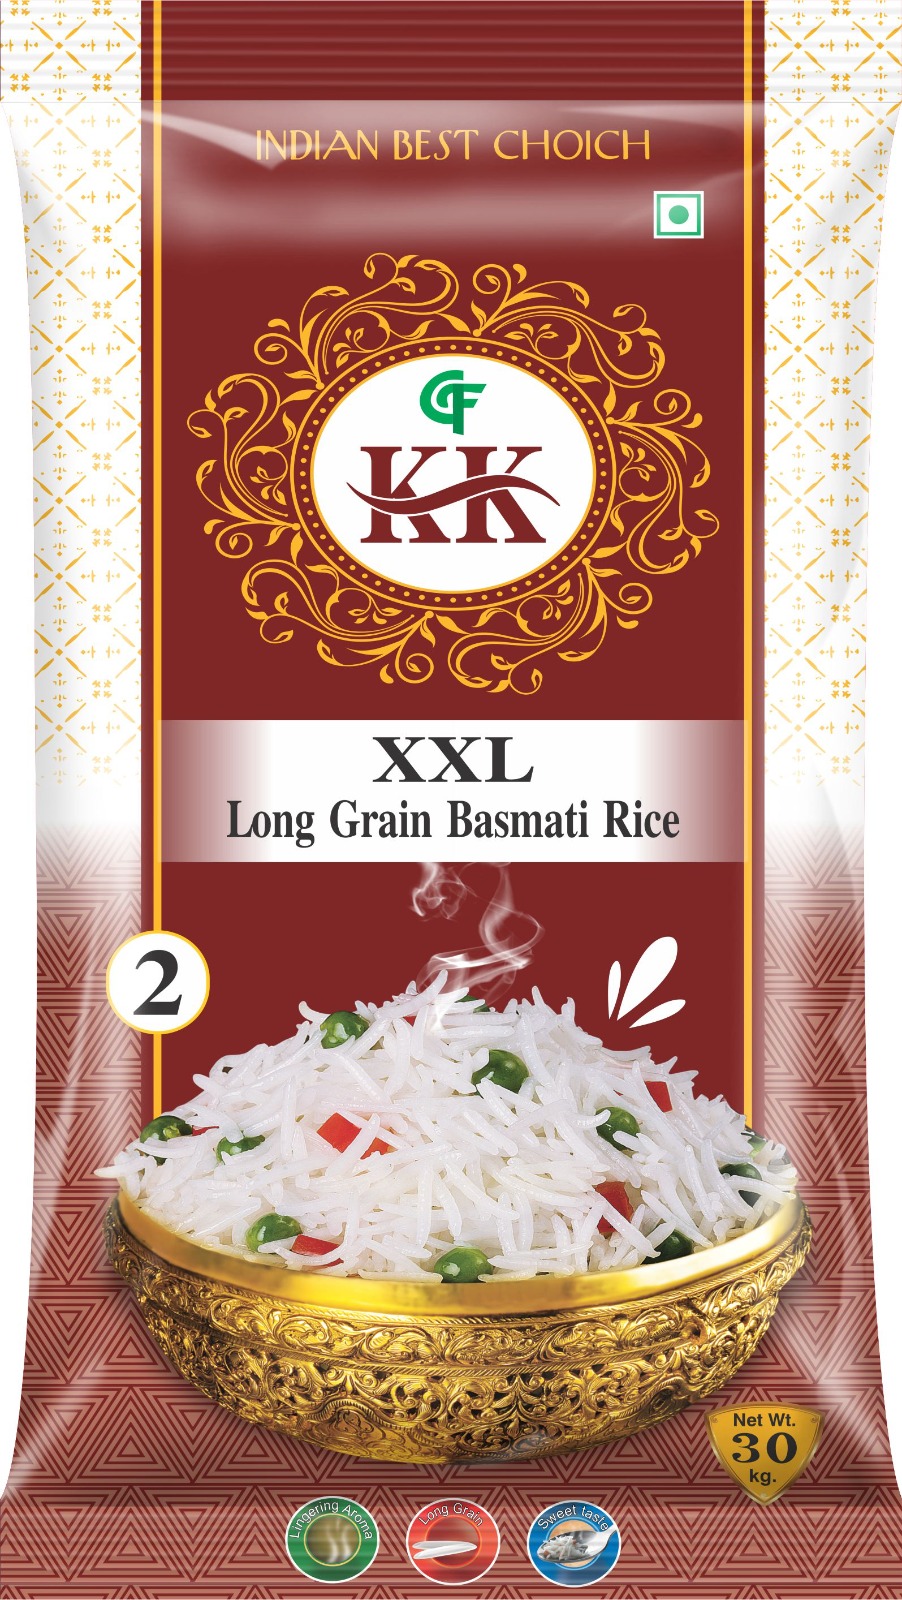 1401 Rice (xxl long grain basmati rice)